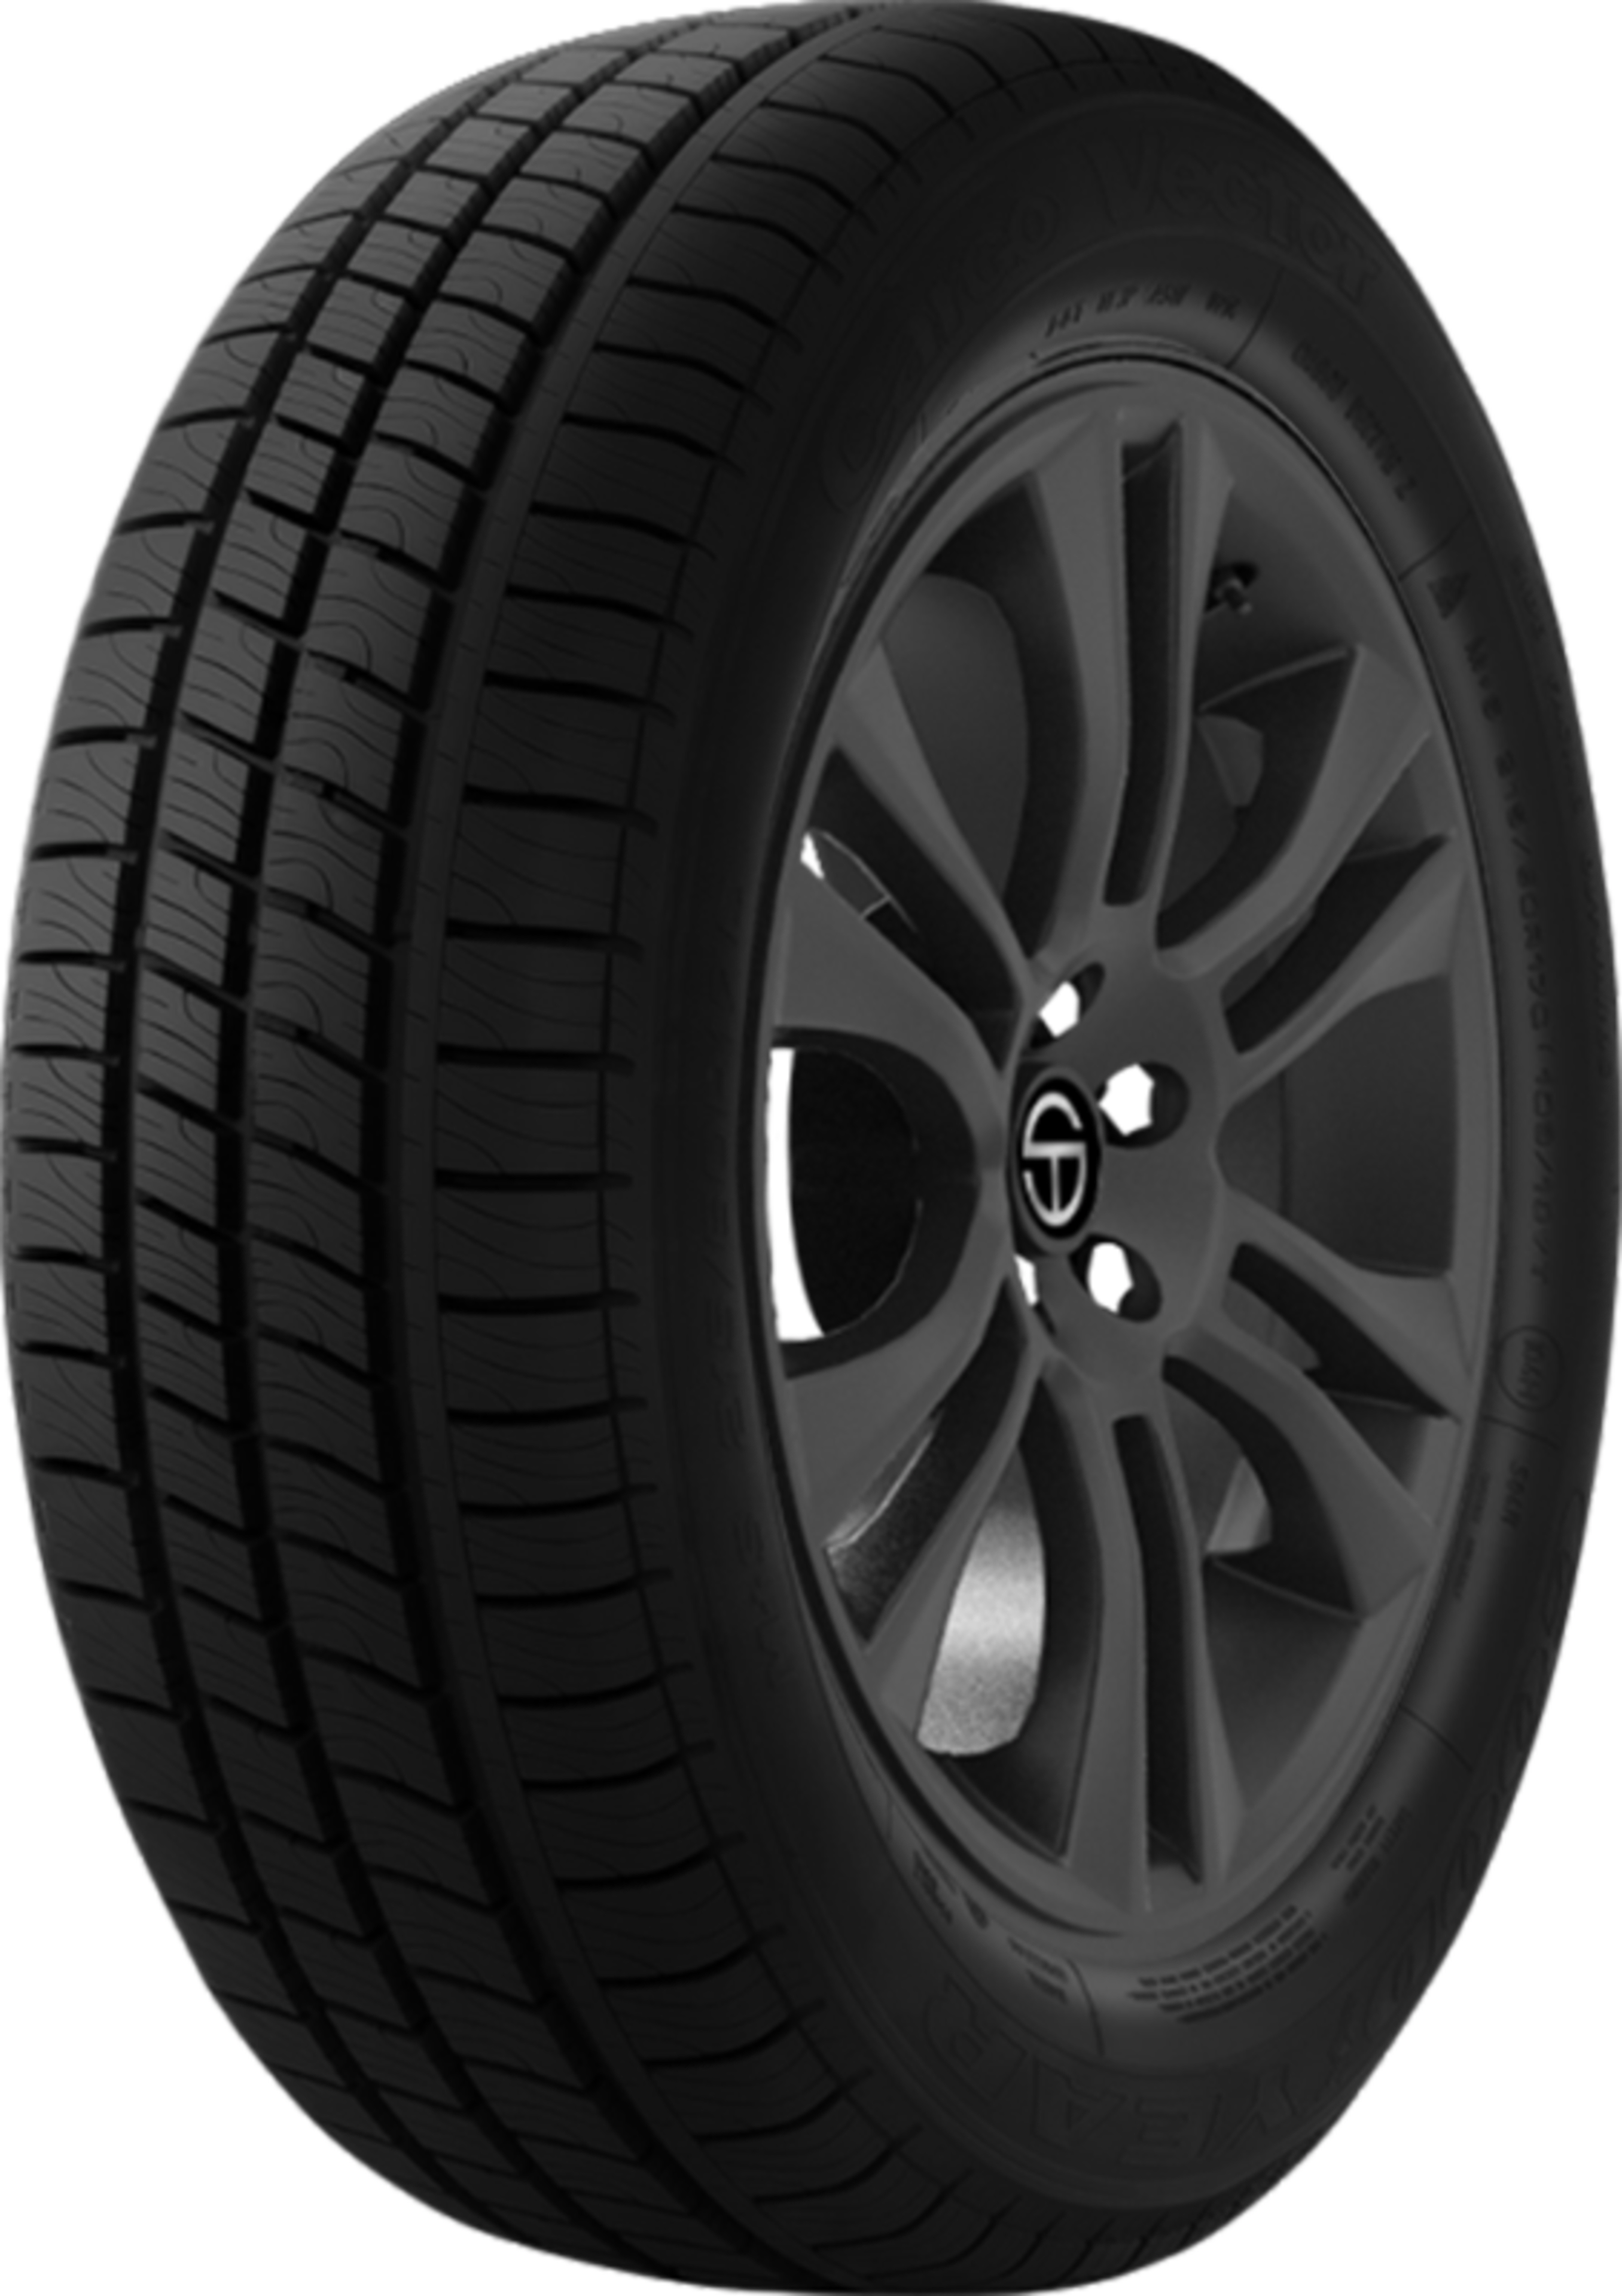 Buy Goodyear Cargo Vector 2 Tires Online | SimpleTire